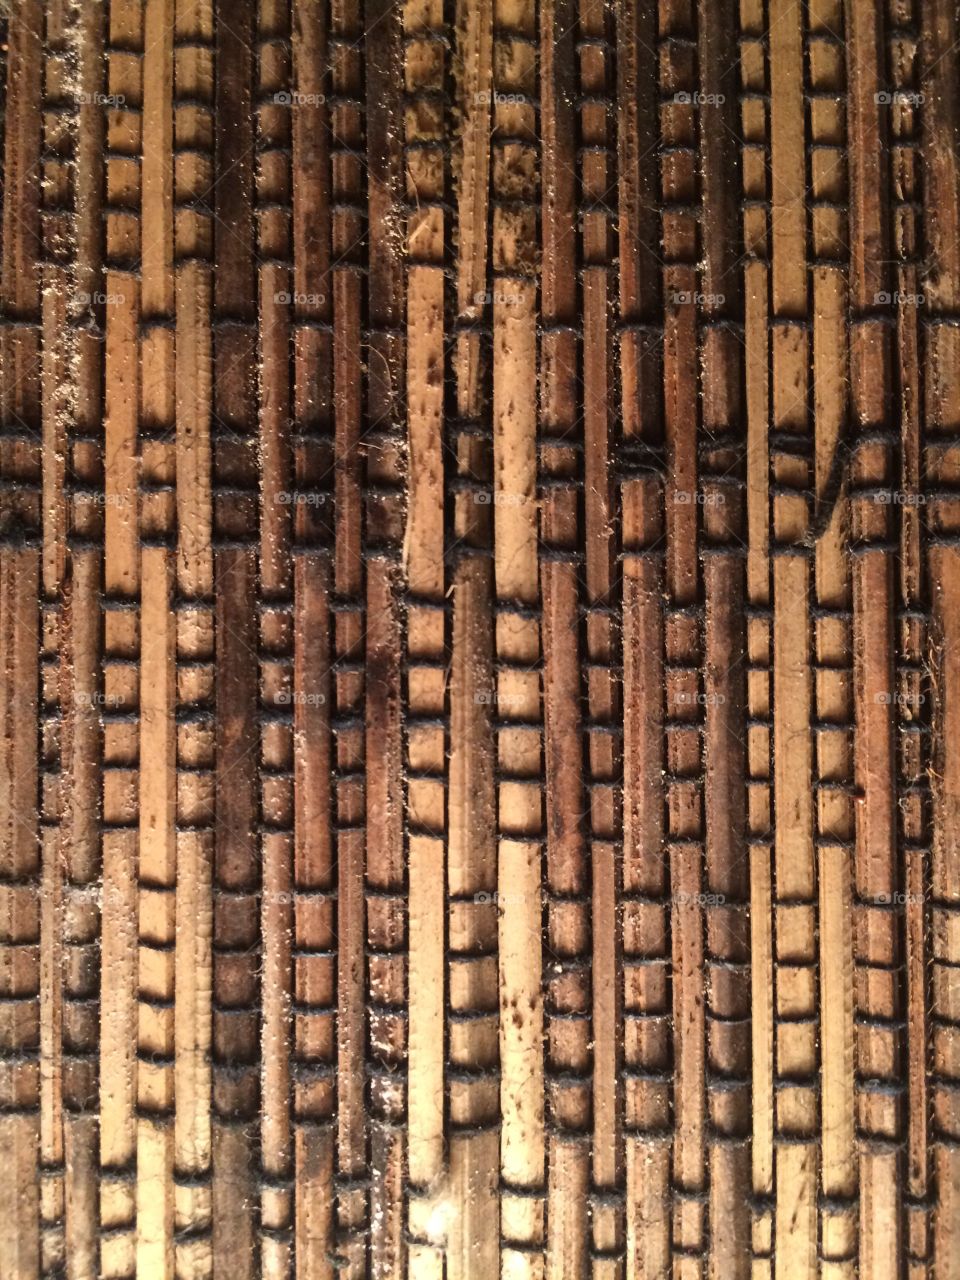 Bamboo matting